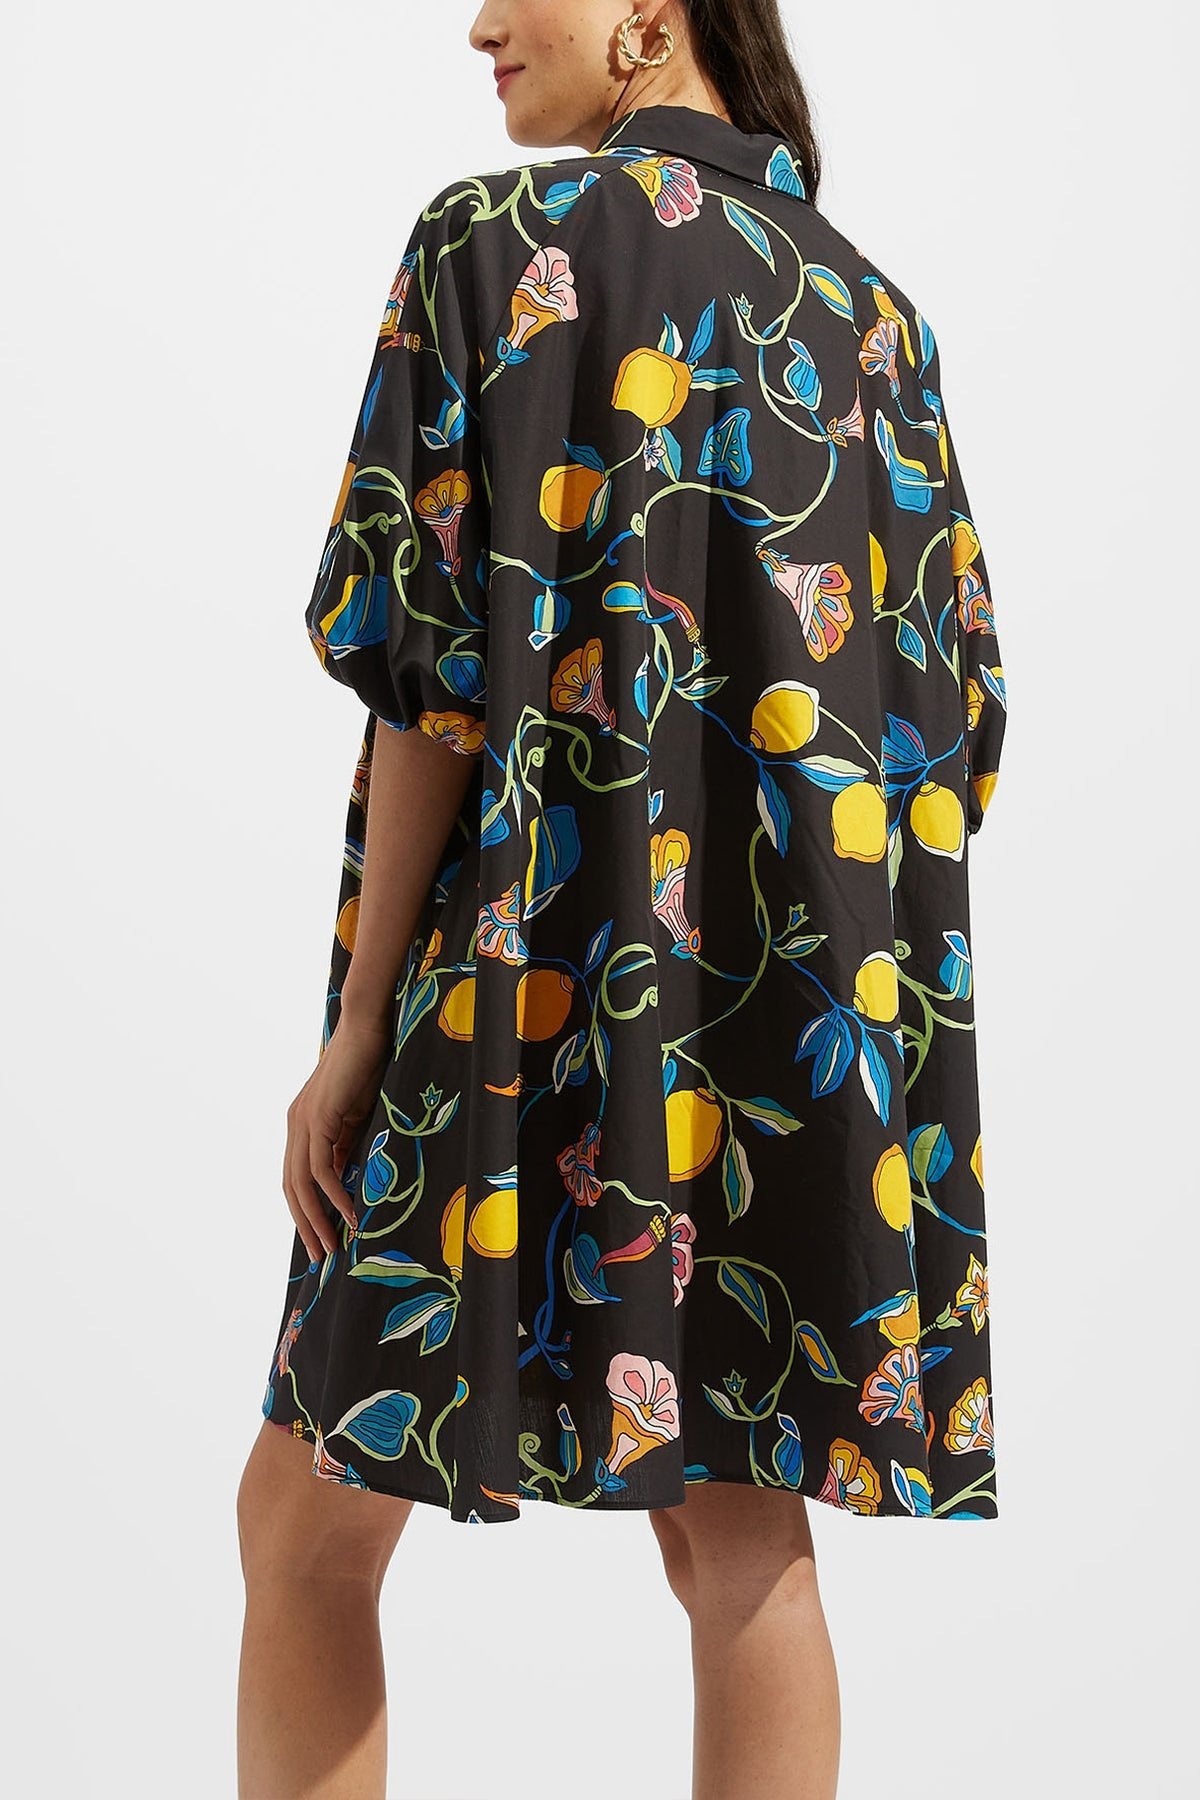 Sunburst Dress in Borboni - shop-olivia.com